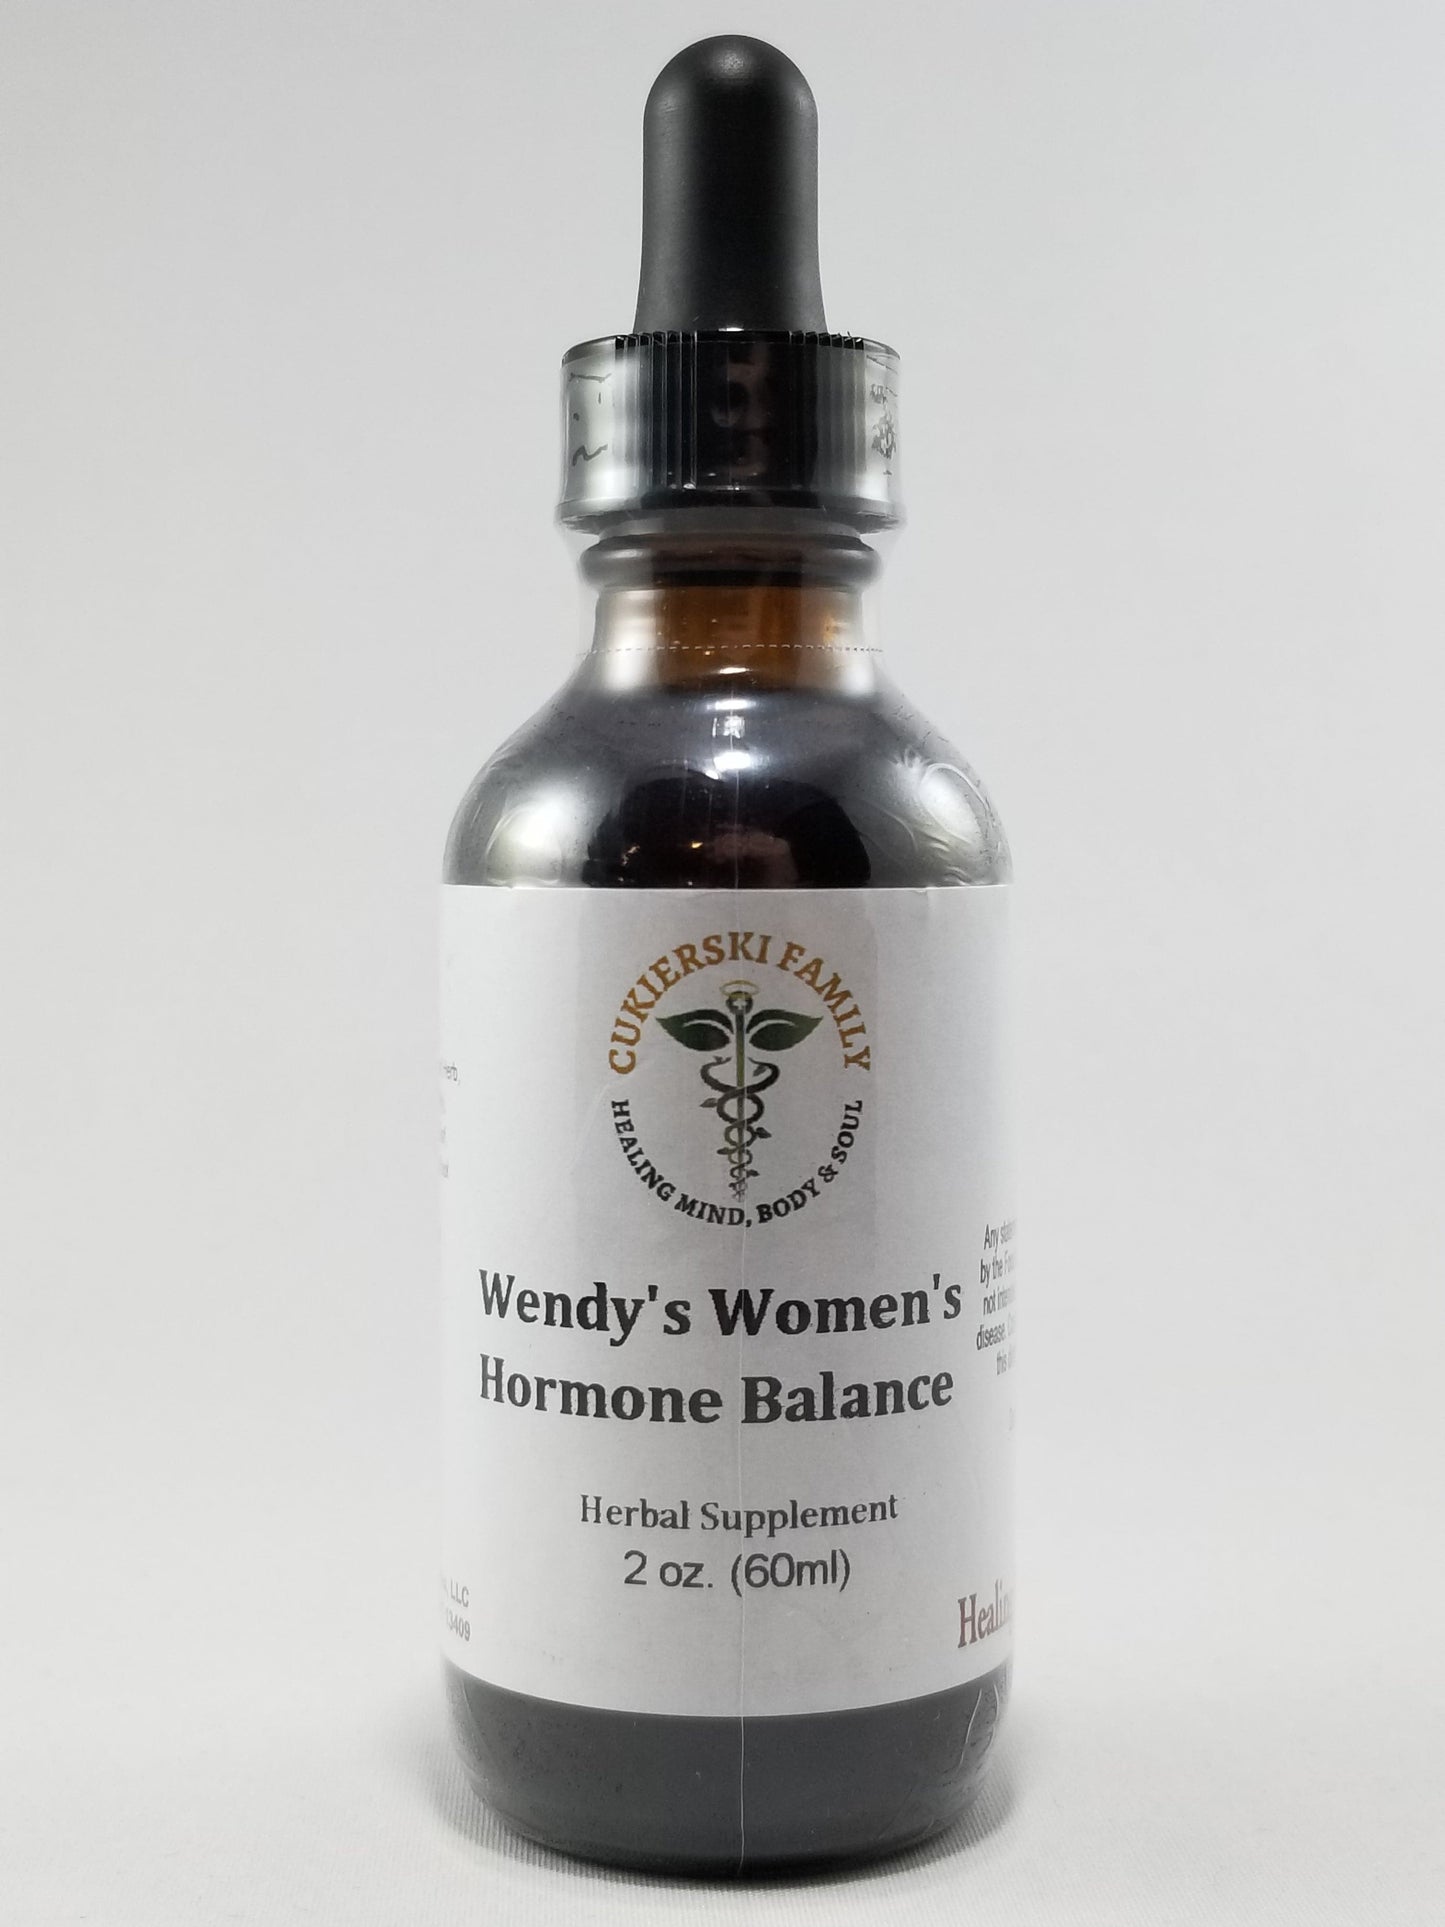 Wendy's Women's Hormone Balance